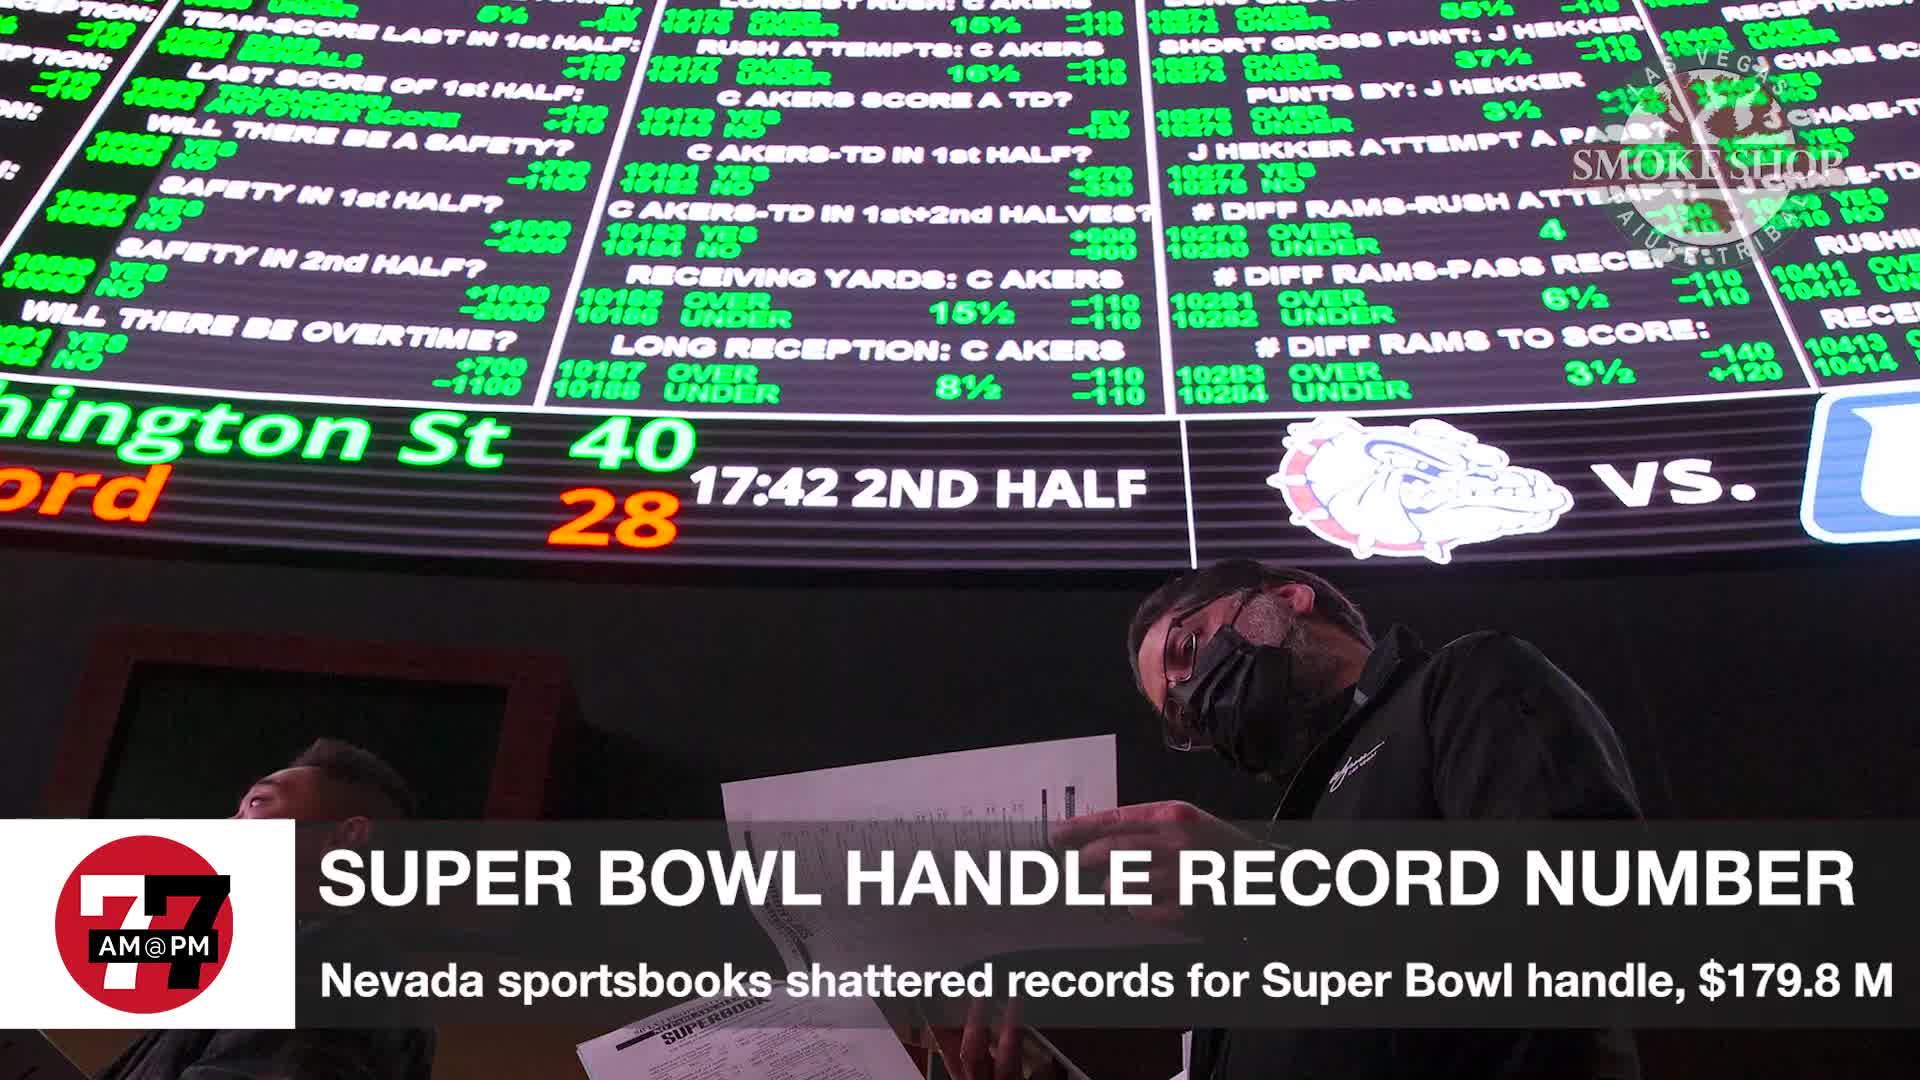 Super Bowl handle record number